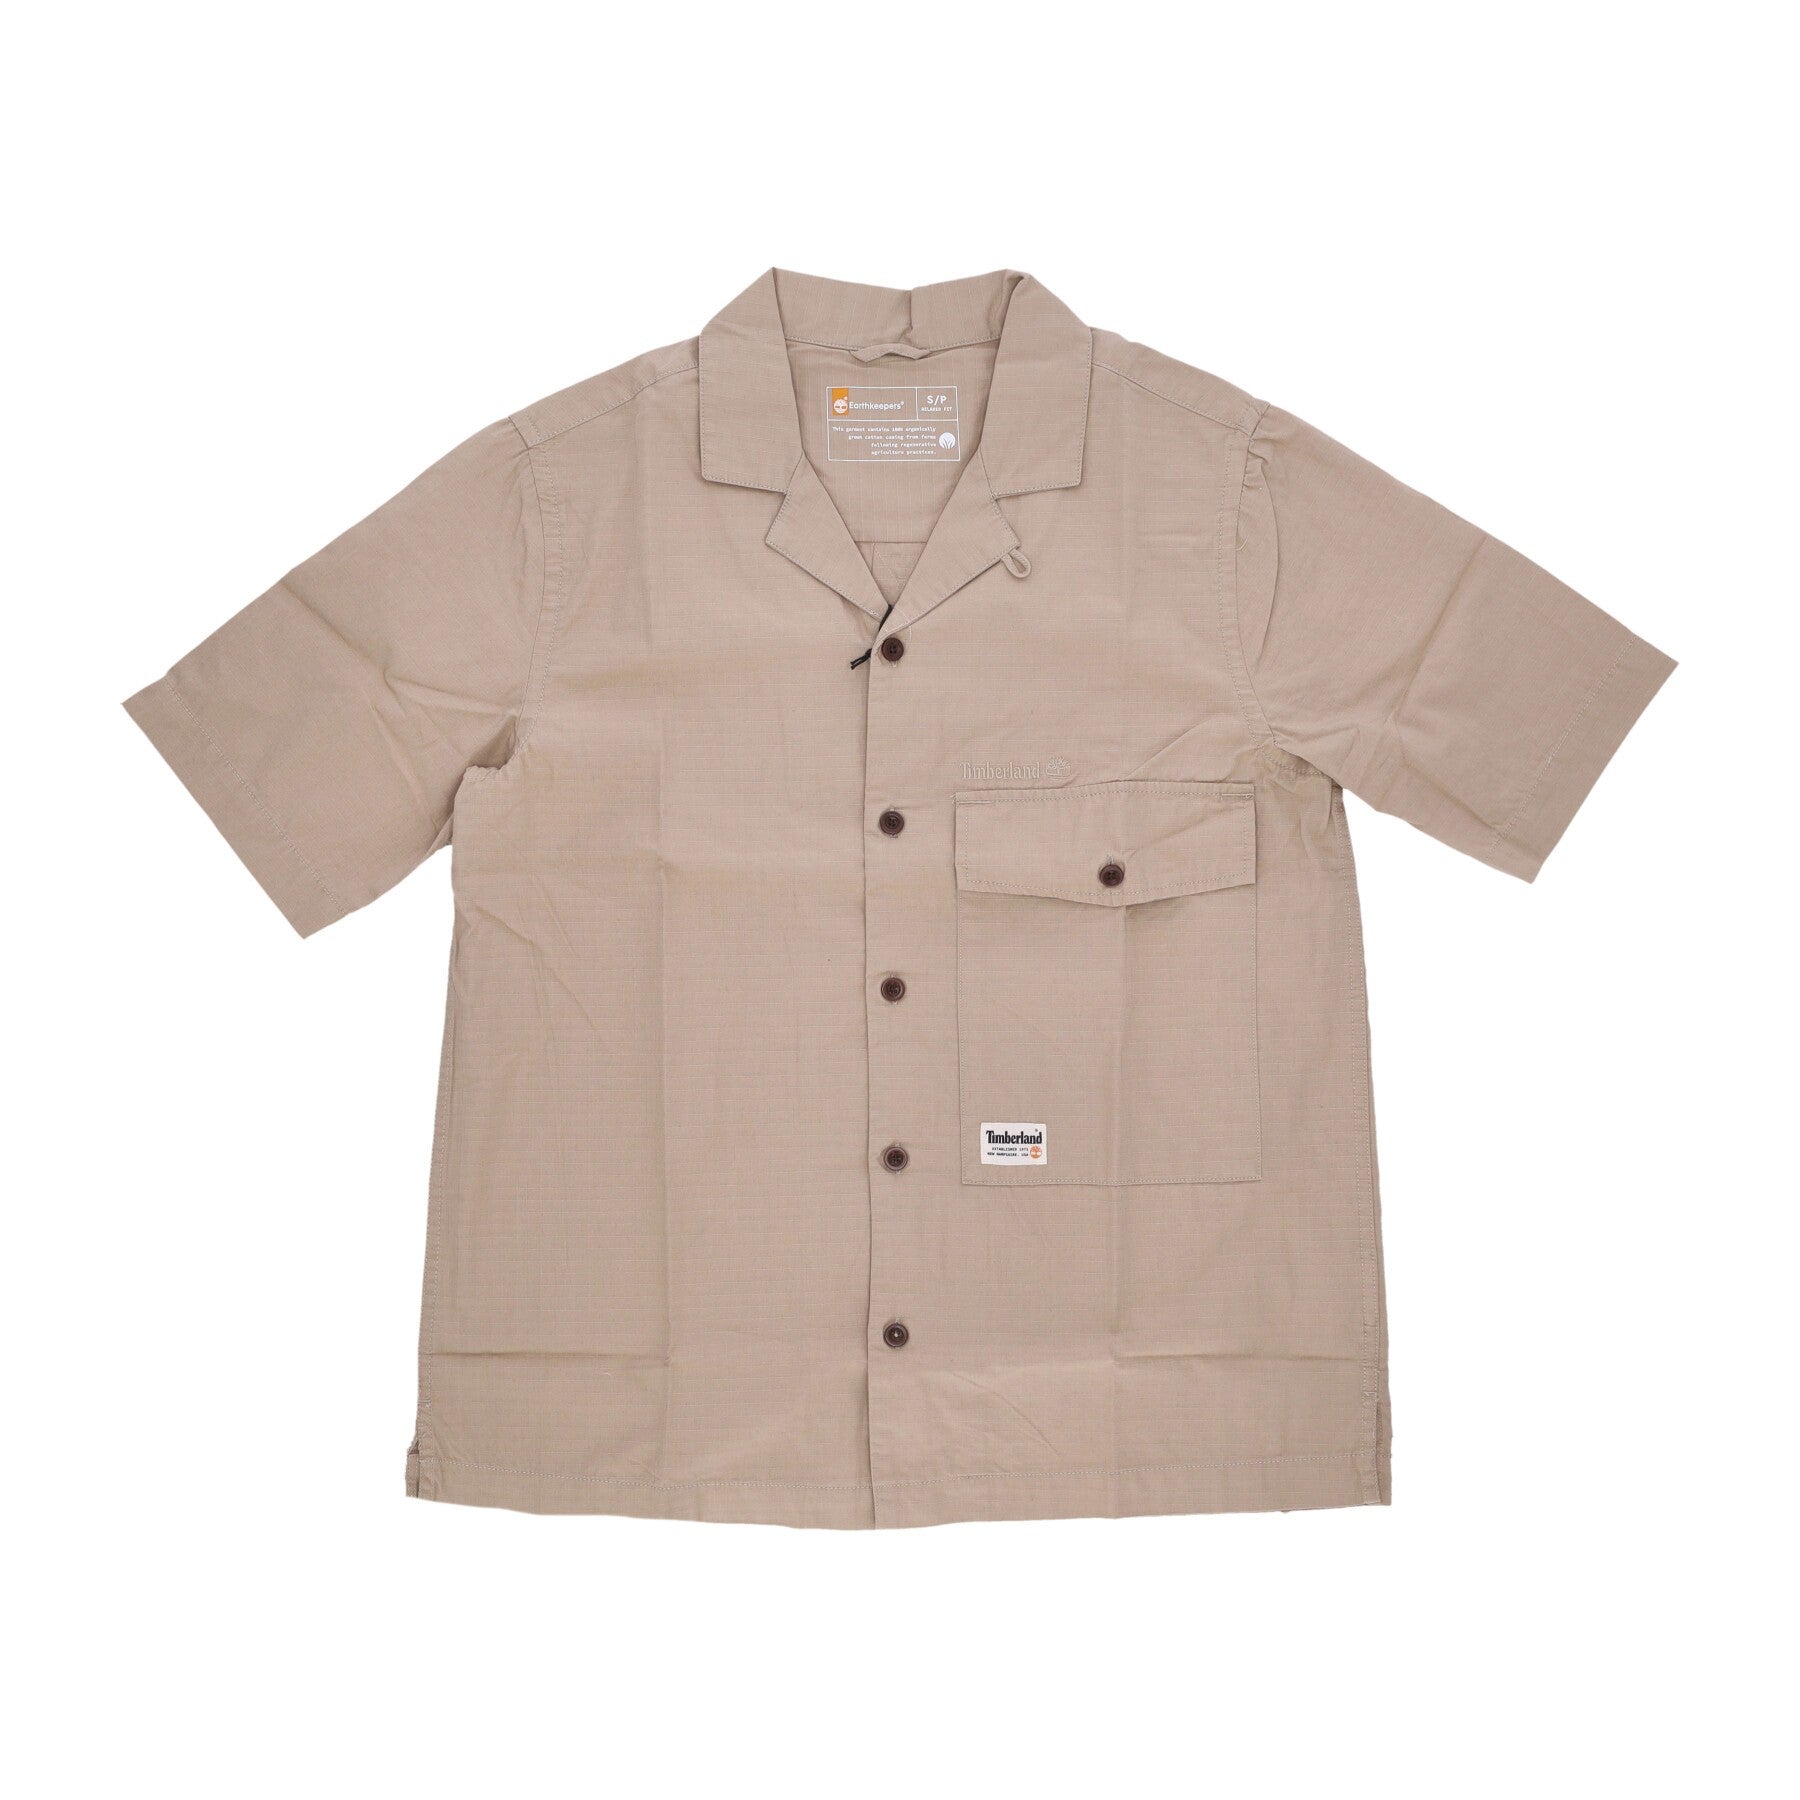 Men's Short Sleeve Shirt Wf Roc Shop Shirt Humus